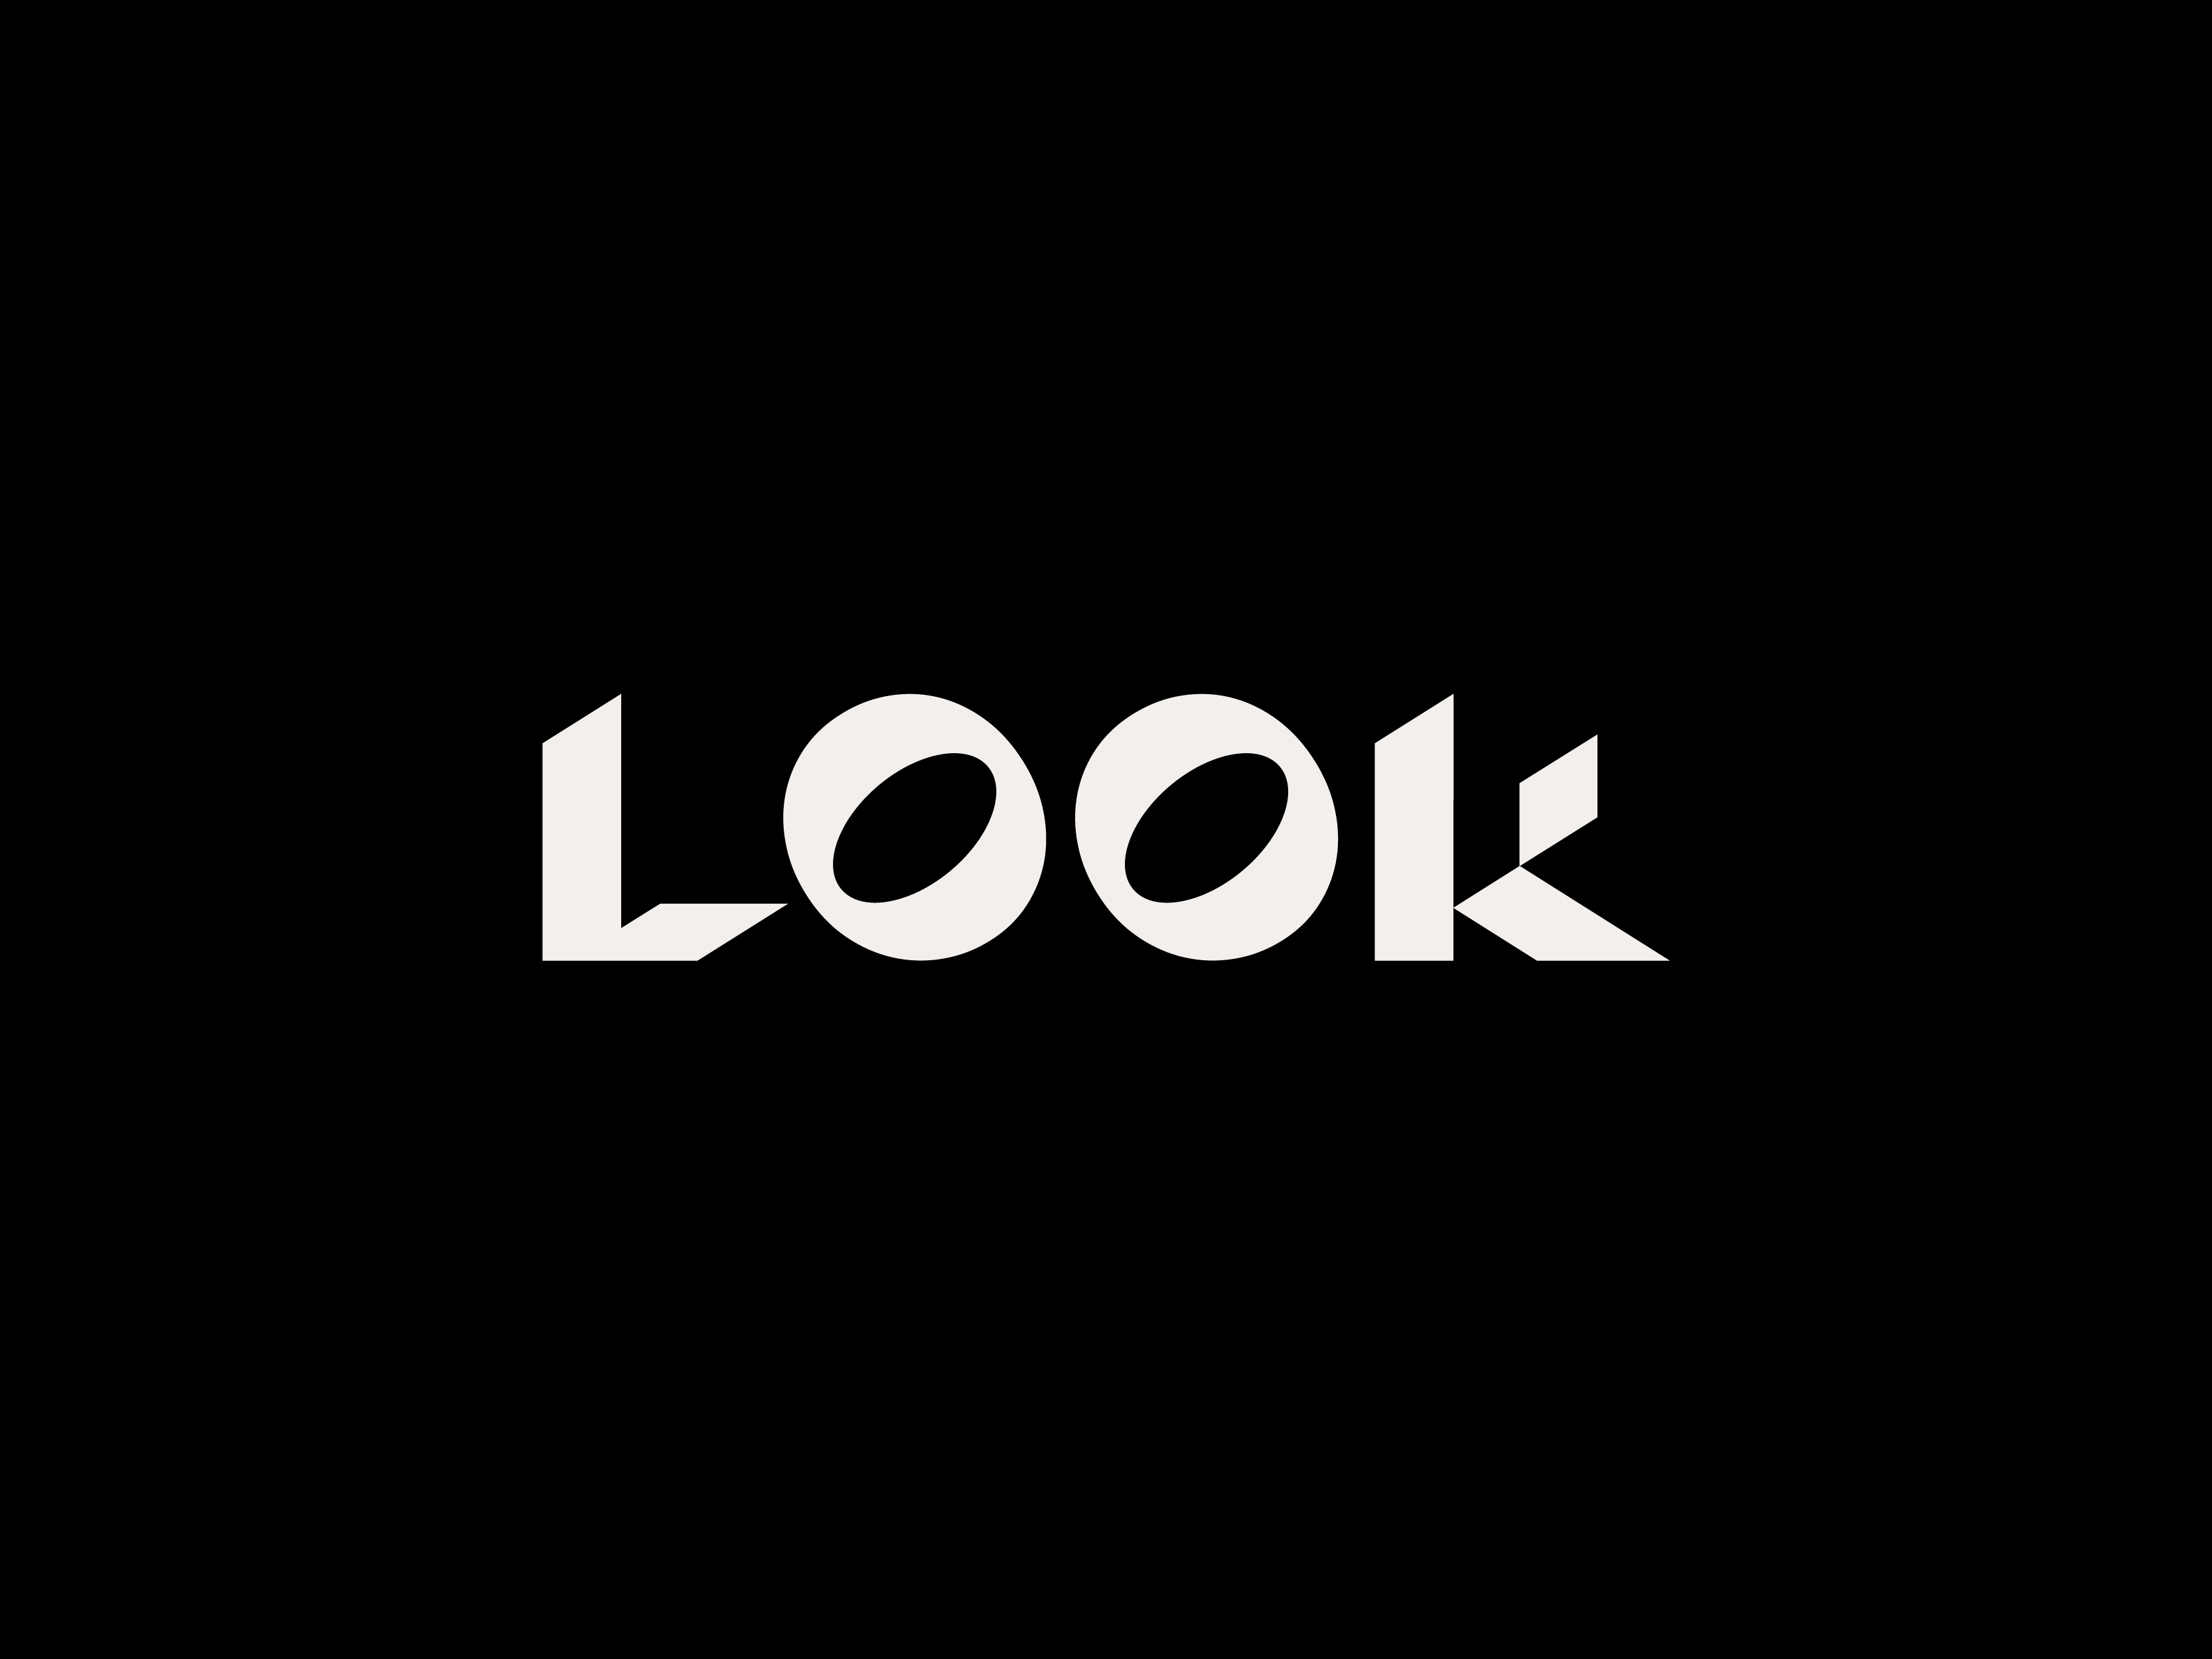 LOOK Studio — Logo by Look Studio on Dribbble